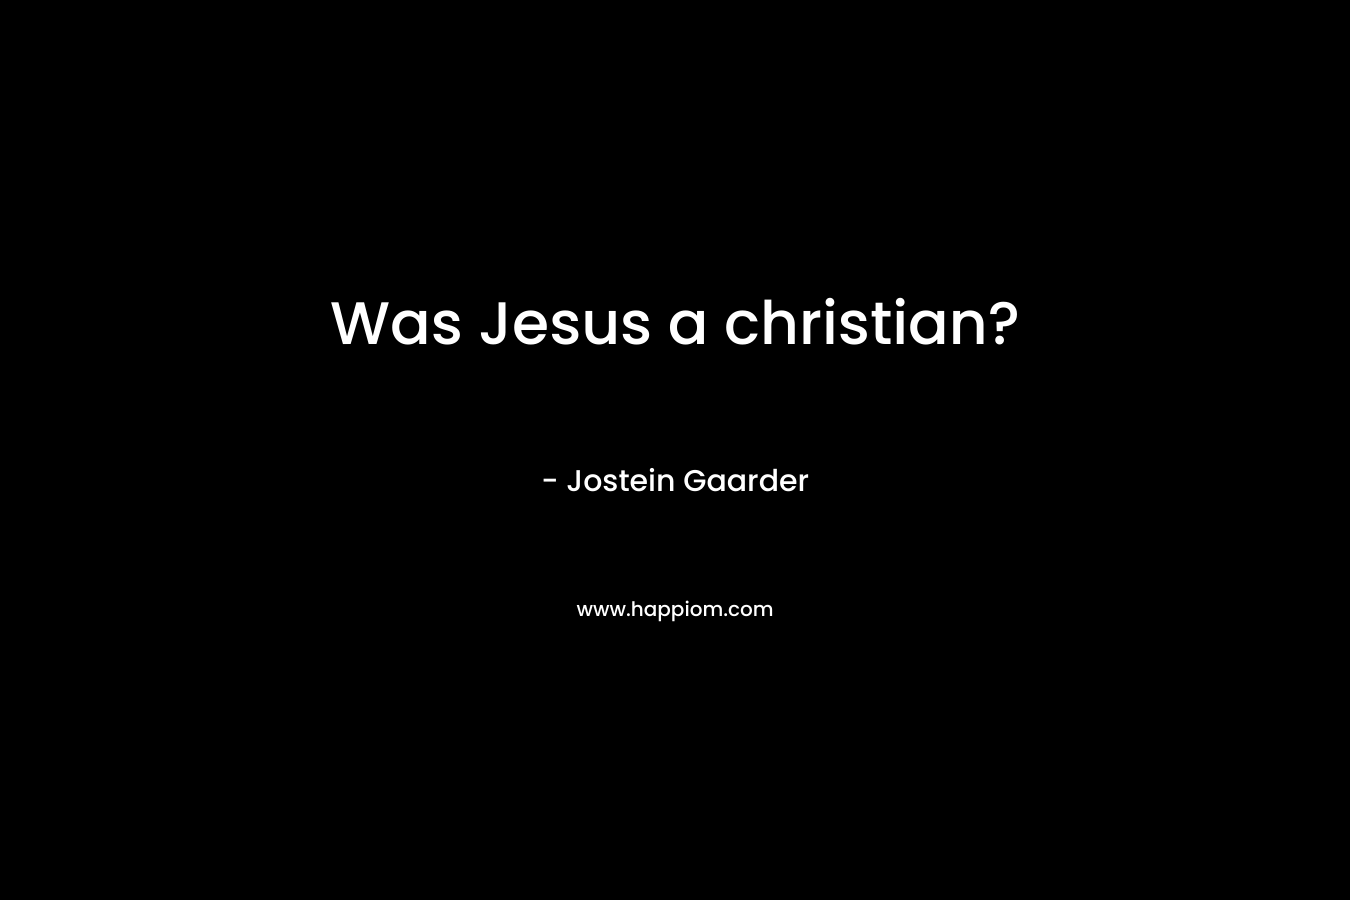 Was Jesus a christian?